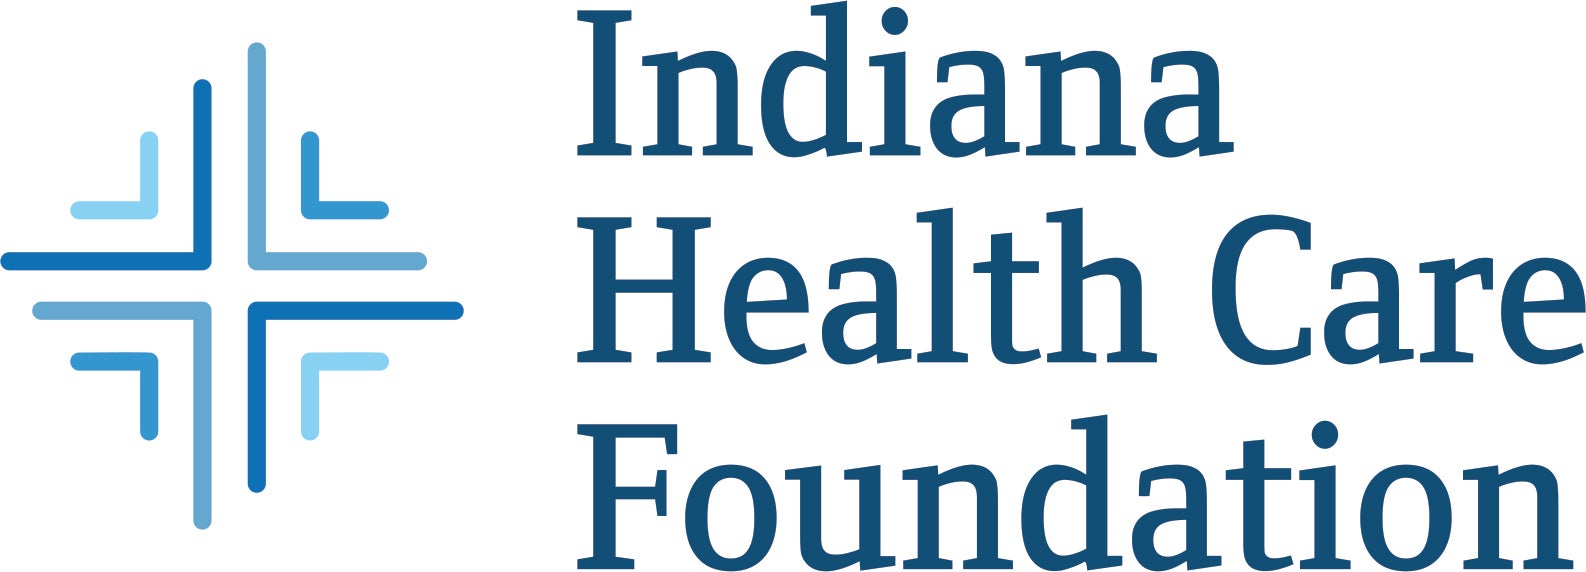 Indiana Health Care Foundation logo